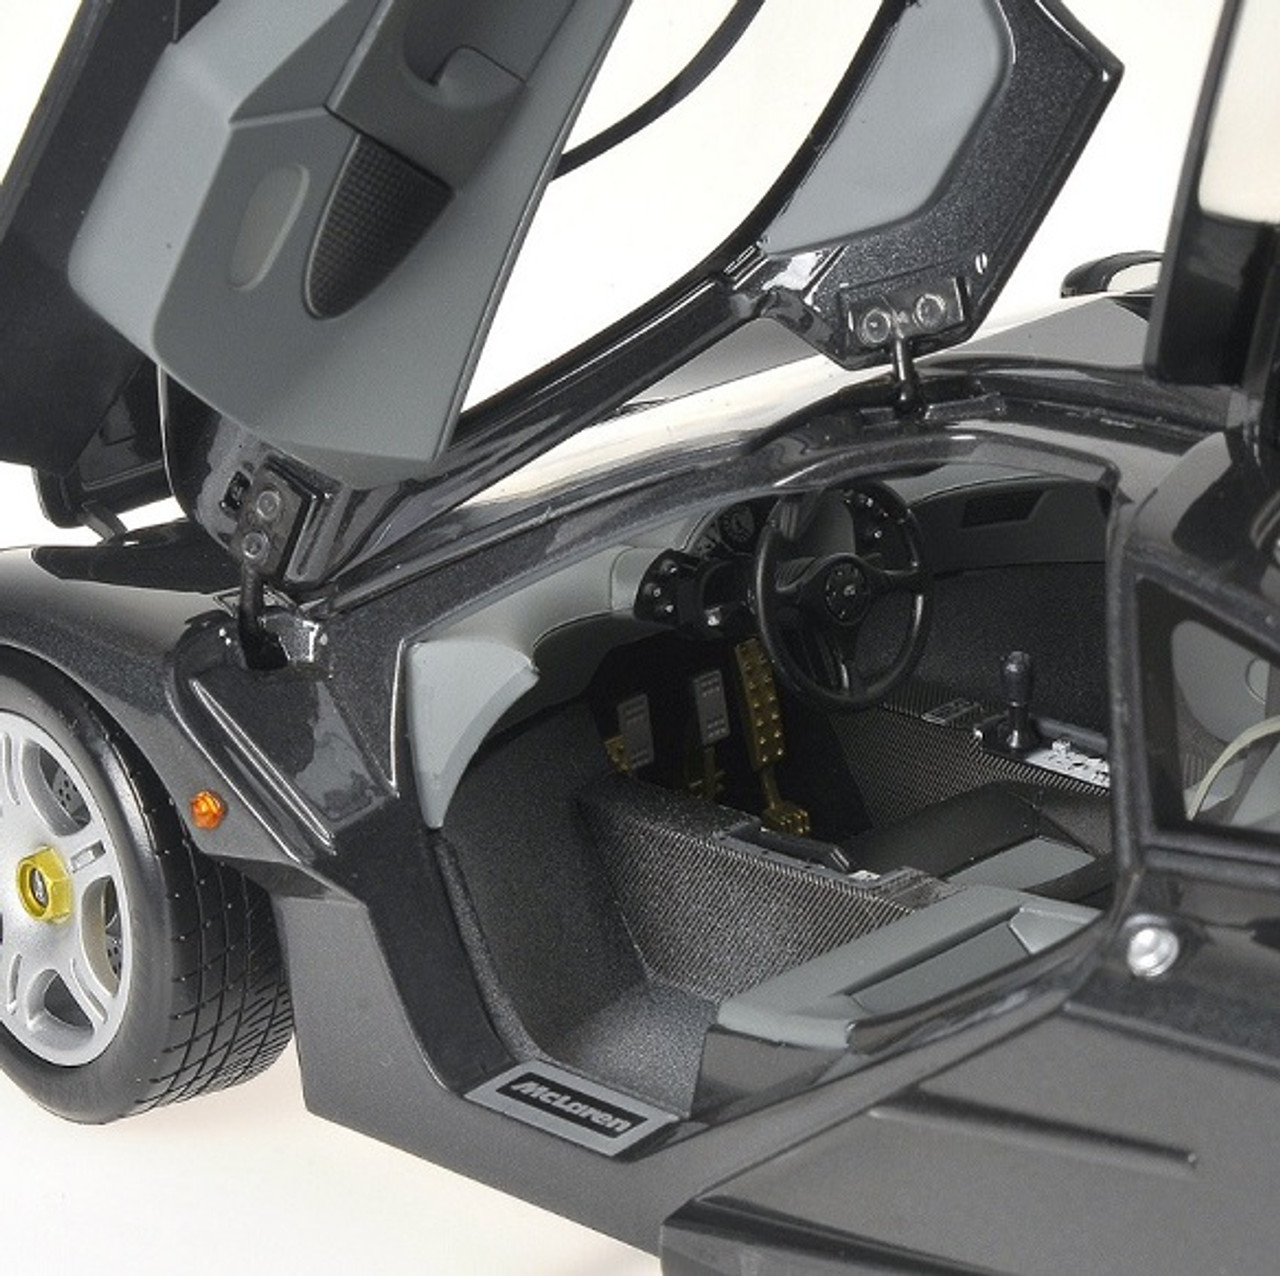 1/18 Minichamps McLaren F1 Road Car (Black) Diecast Car Model Limited